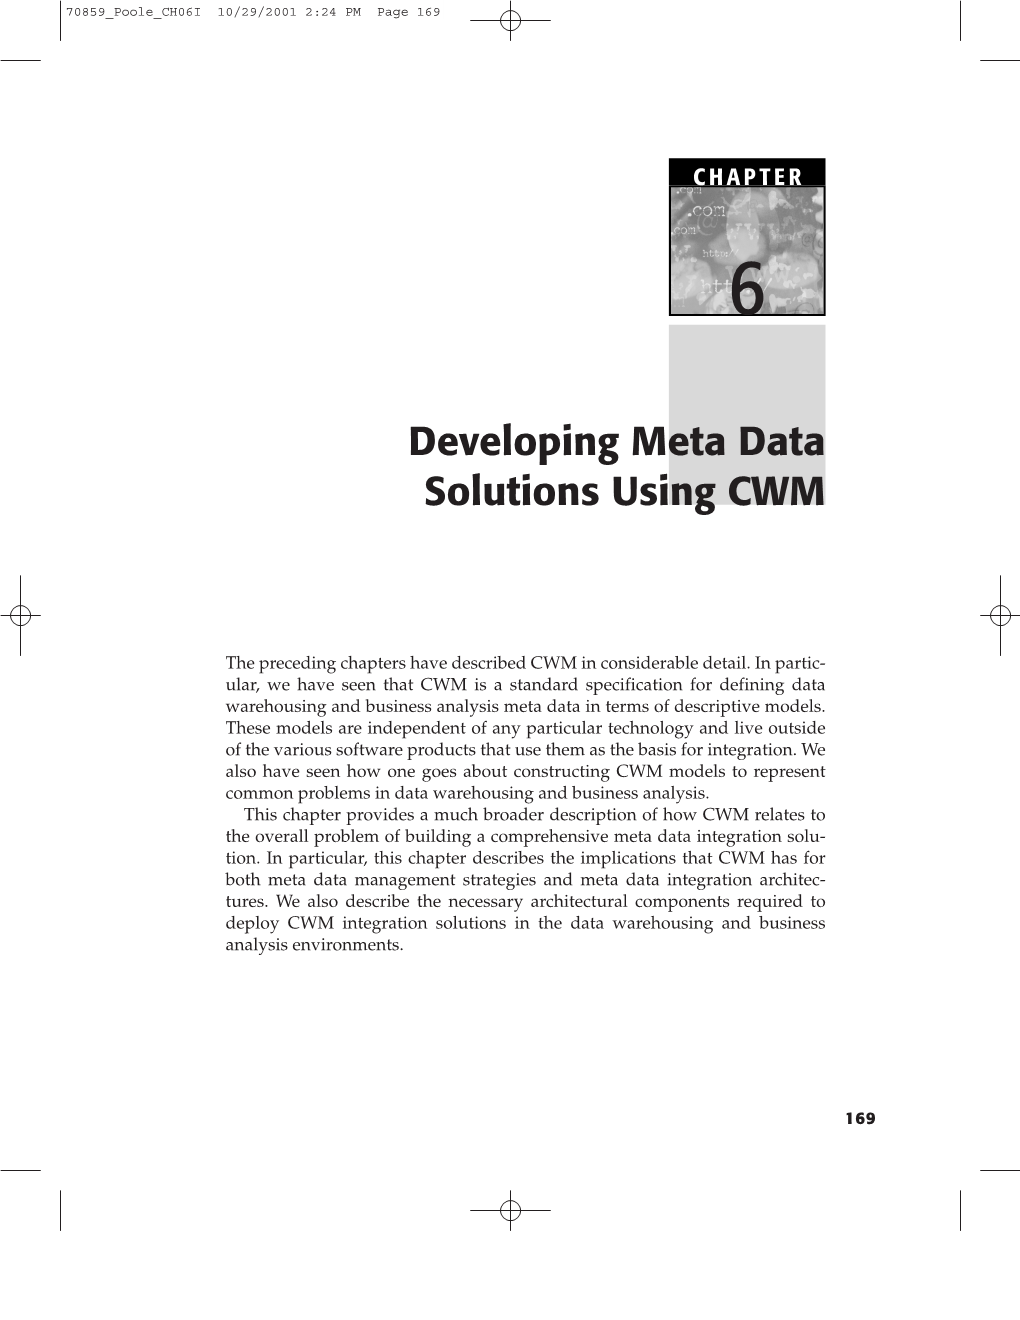 Developing a Meta Data Integration Architecture